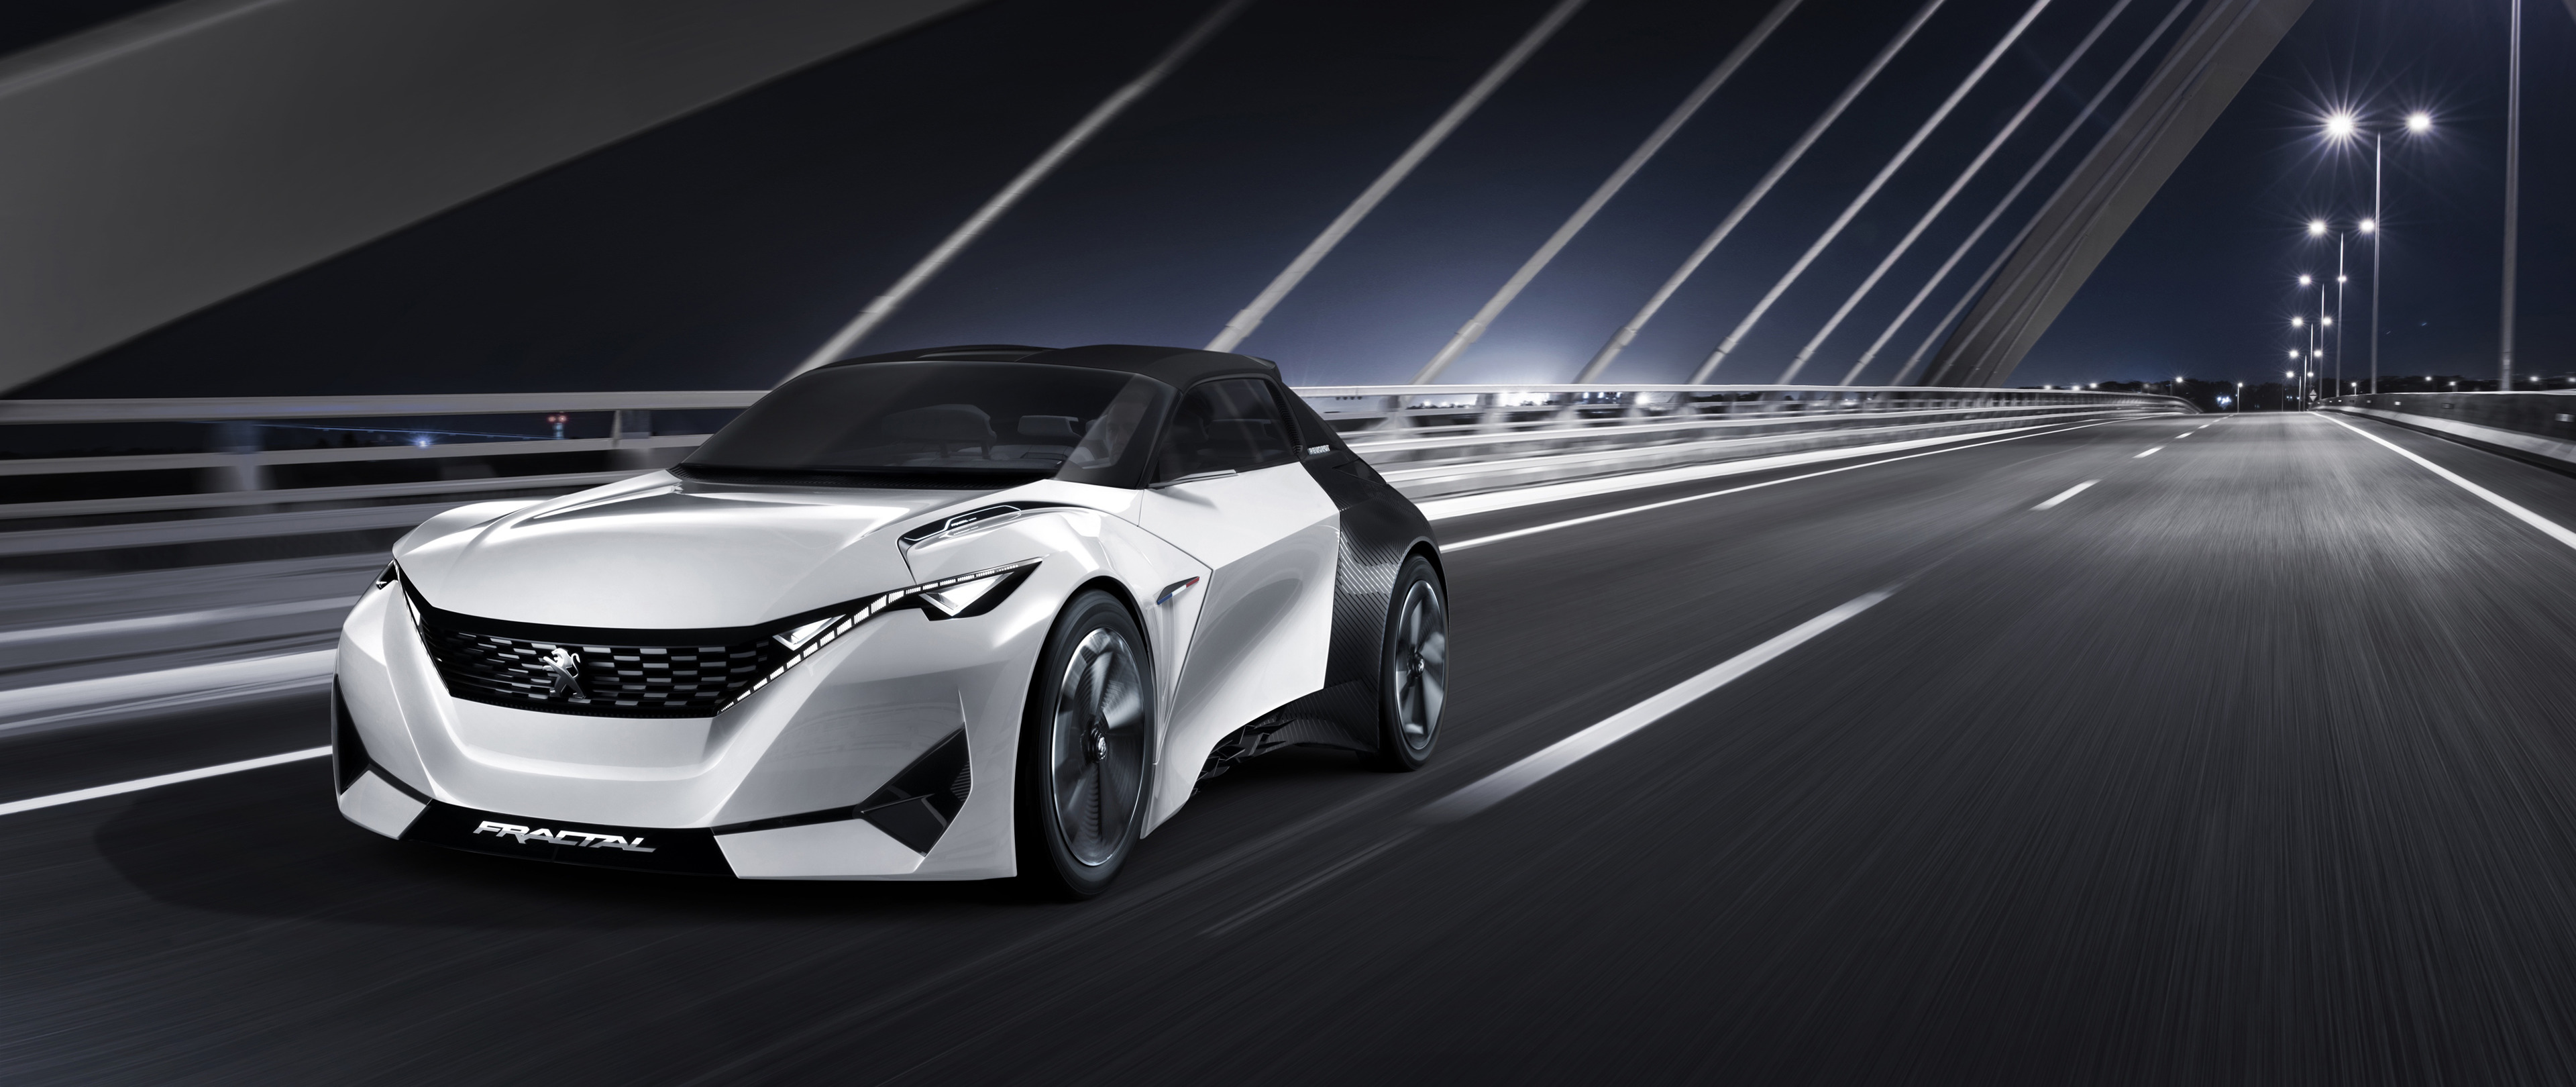 Peugeot Fractal, Concept Cars, Car, Vehicle, Electric Car, Bridge, Road, Motion Blur, Night, Lights Wallpaper